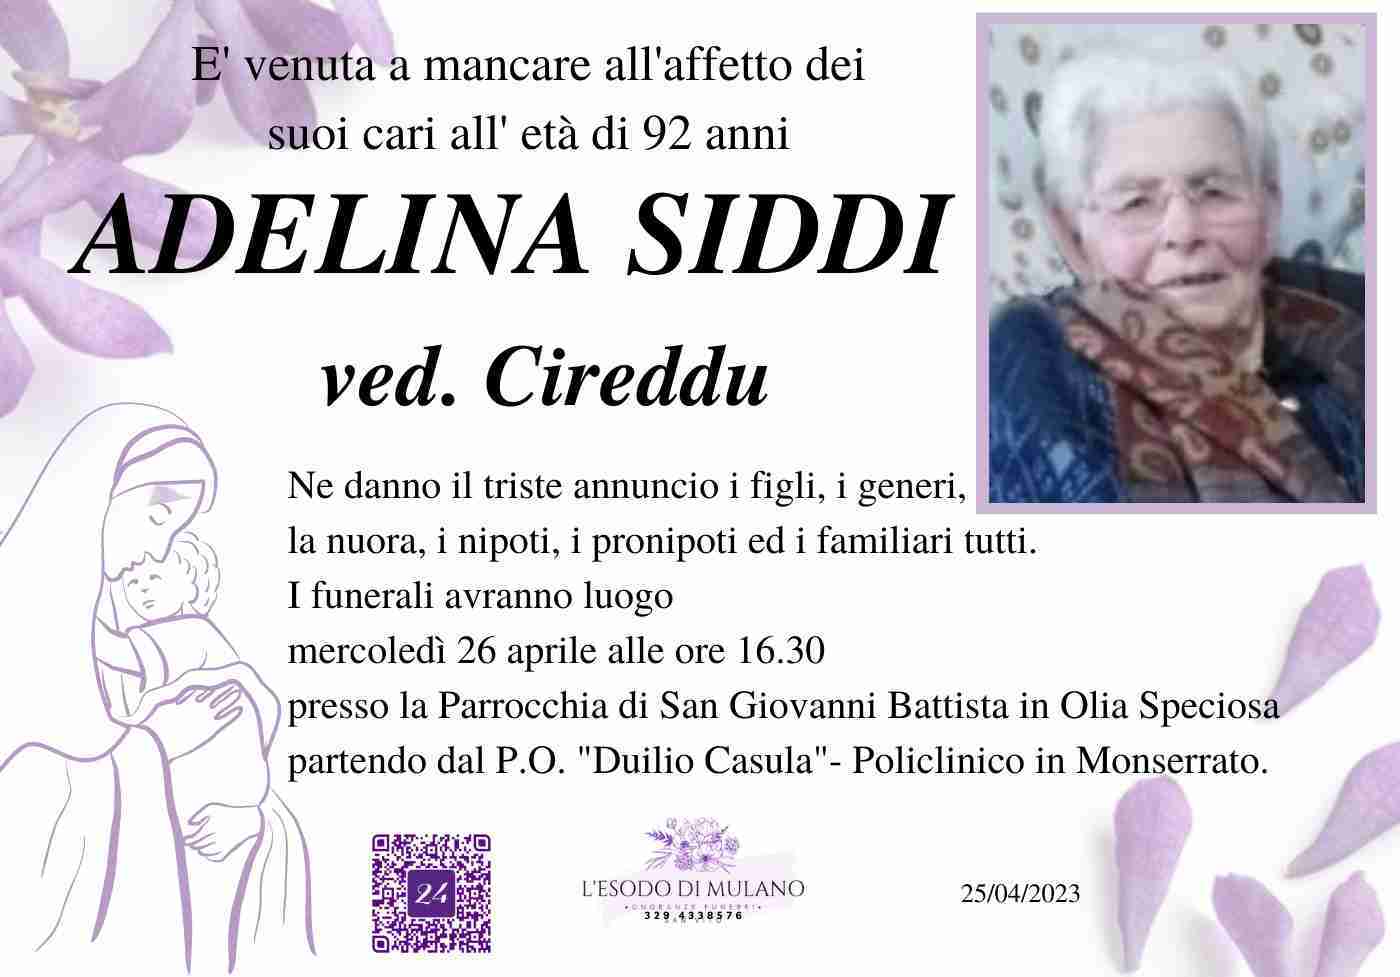 Adelina Siddi